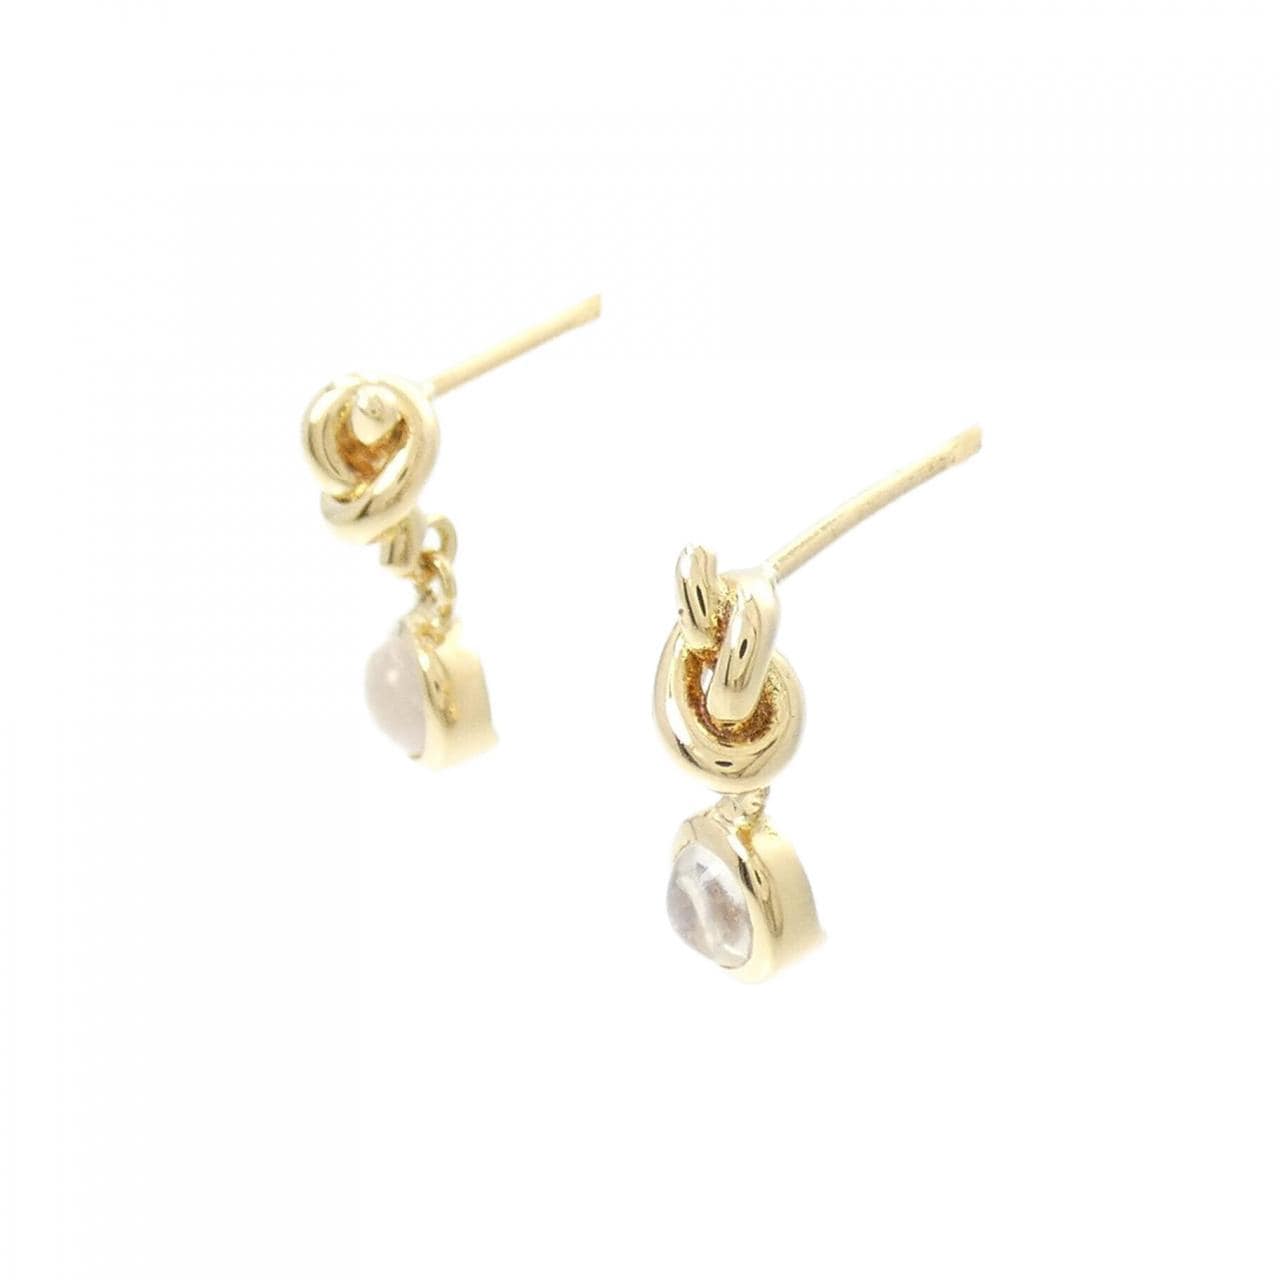 Moonstone earrings